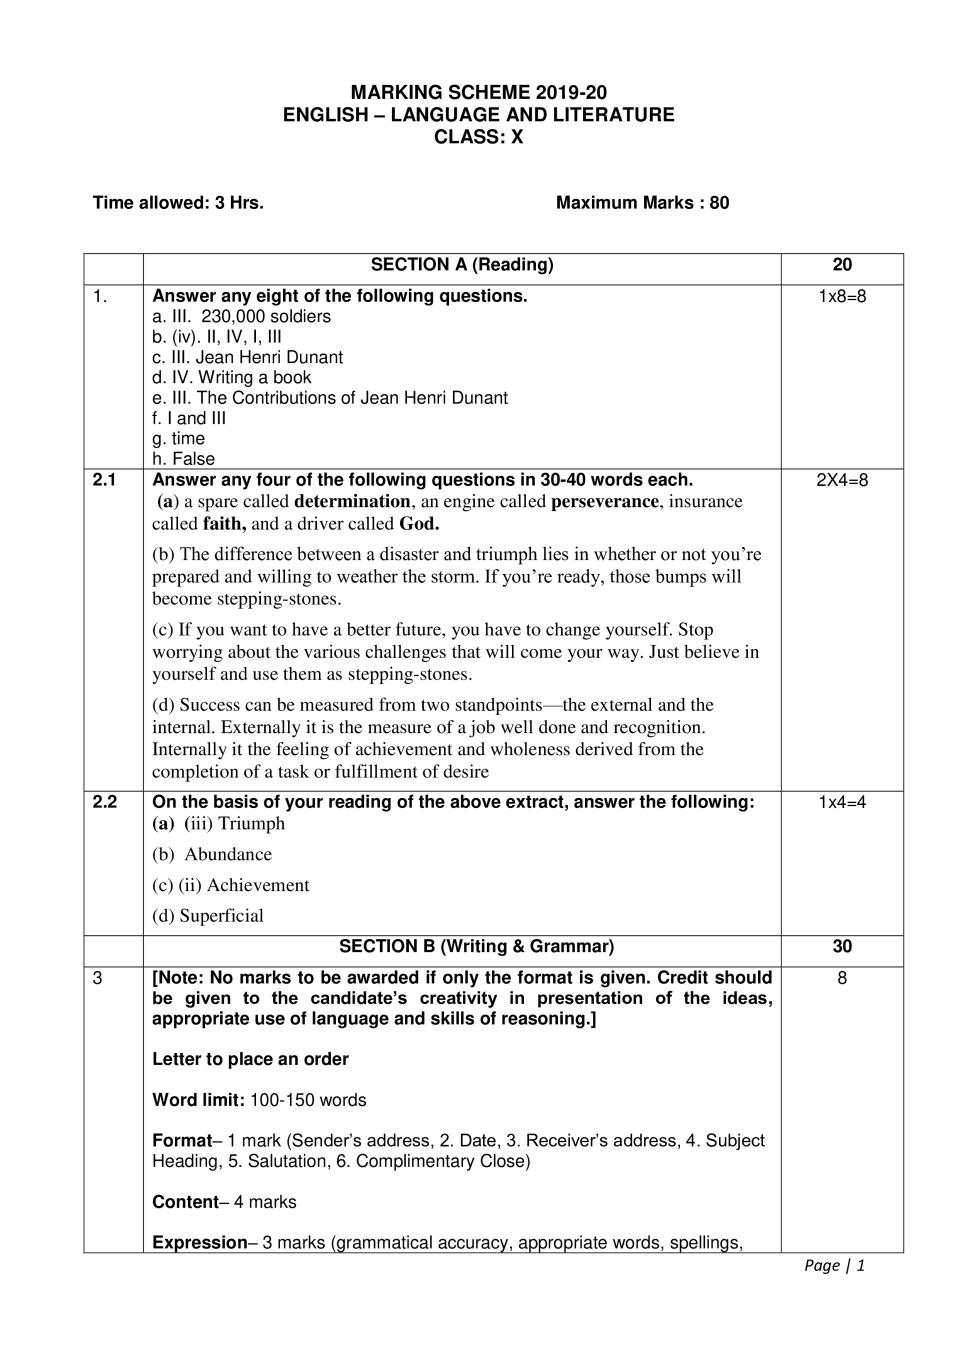 CBSE Class 10 Marking Scheme 2020 for English (Language & Literature) - Page 1